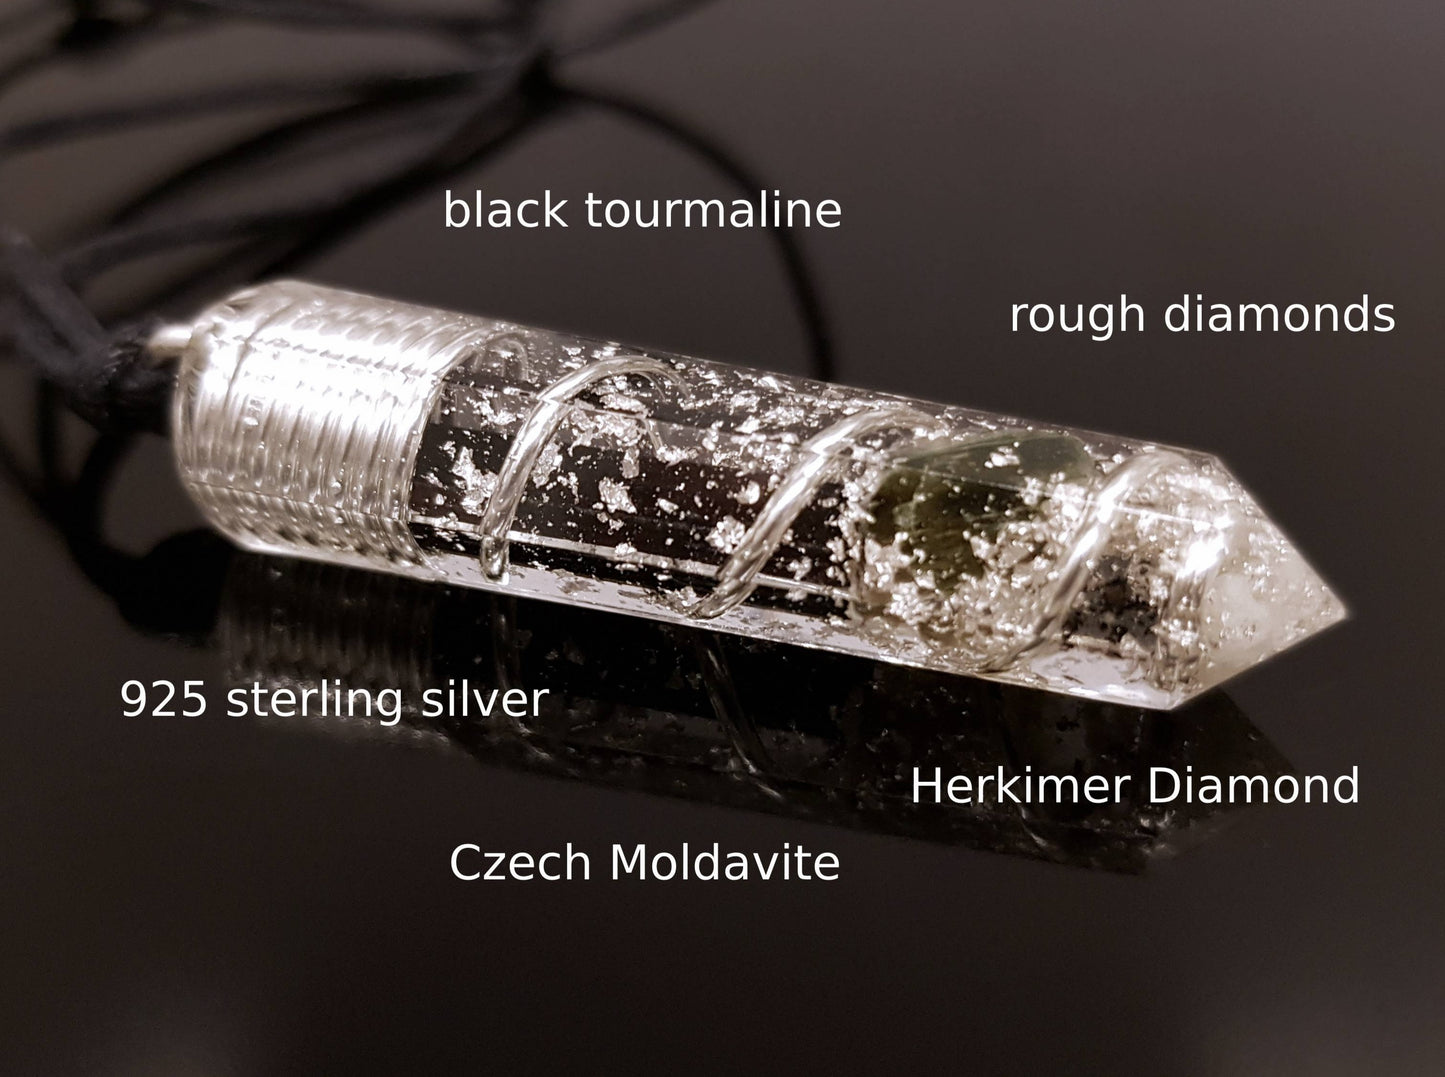 Orgonite pendant with most powerful combination - silver, Black tourmaline, Diamonds, Herkimer, Moldavite